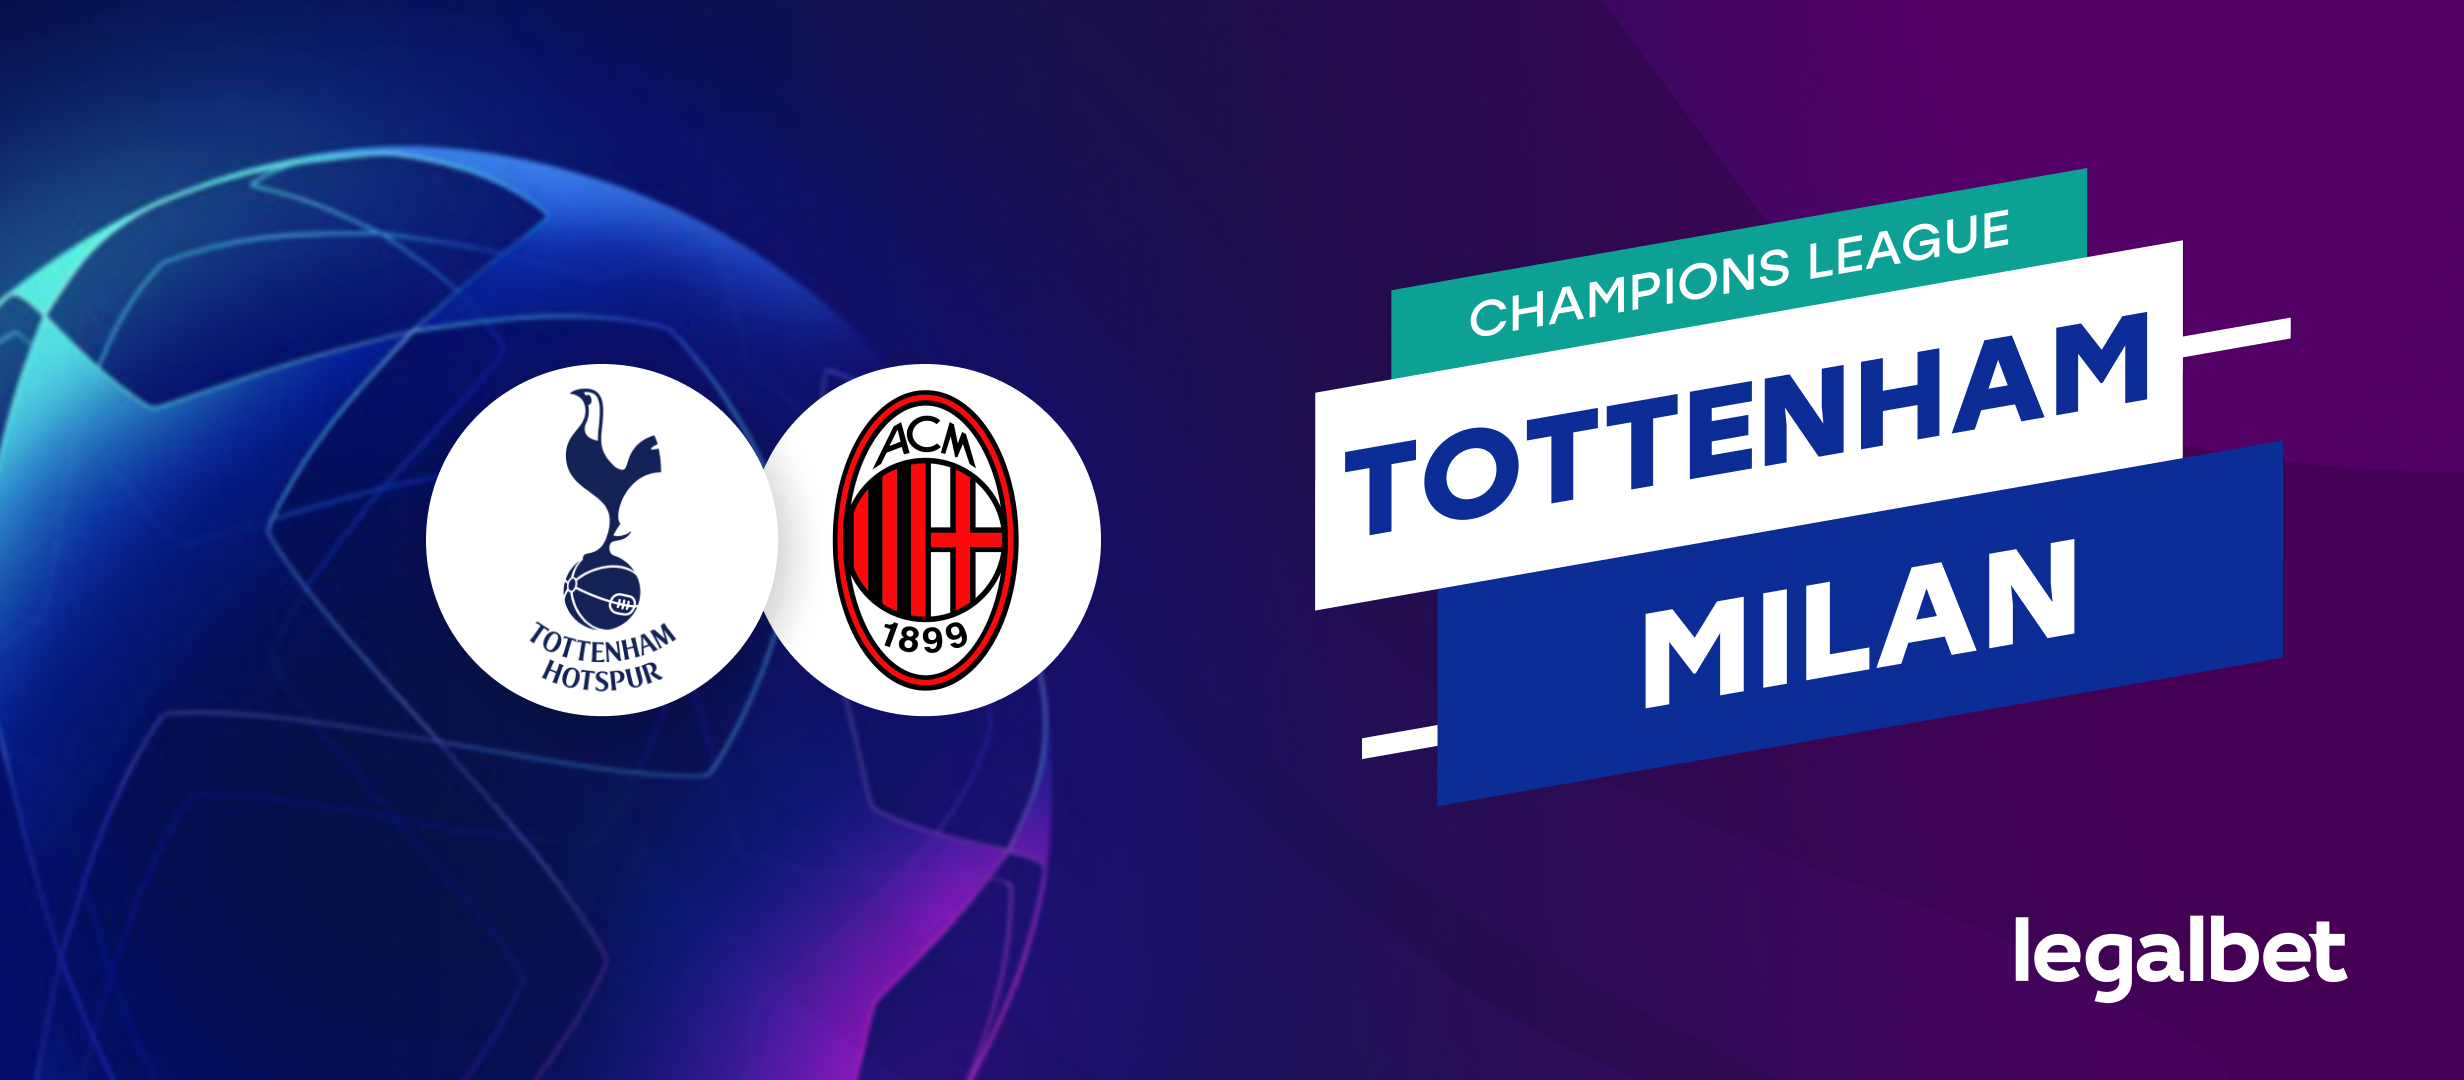 Tottenham - Milan, ponturi la pariuri Champions League